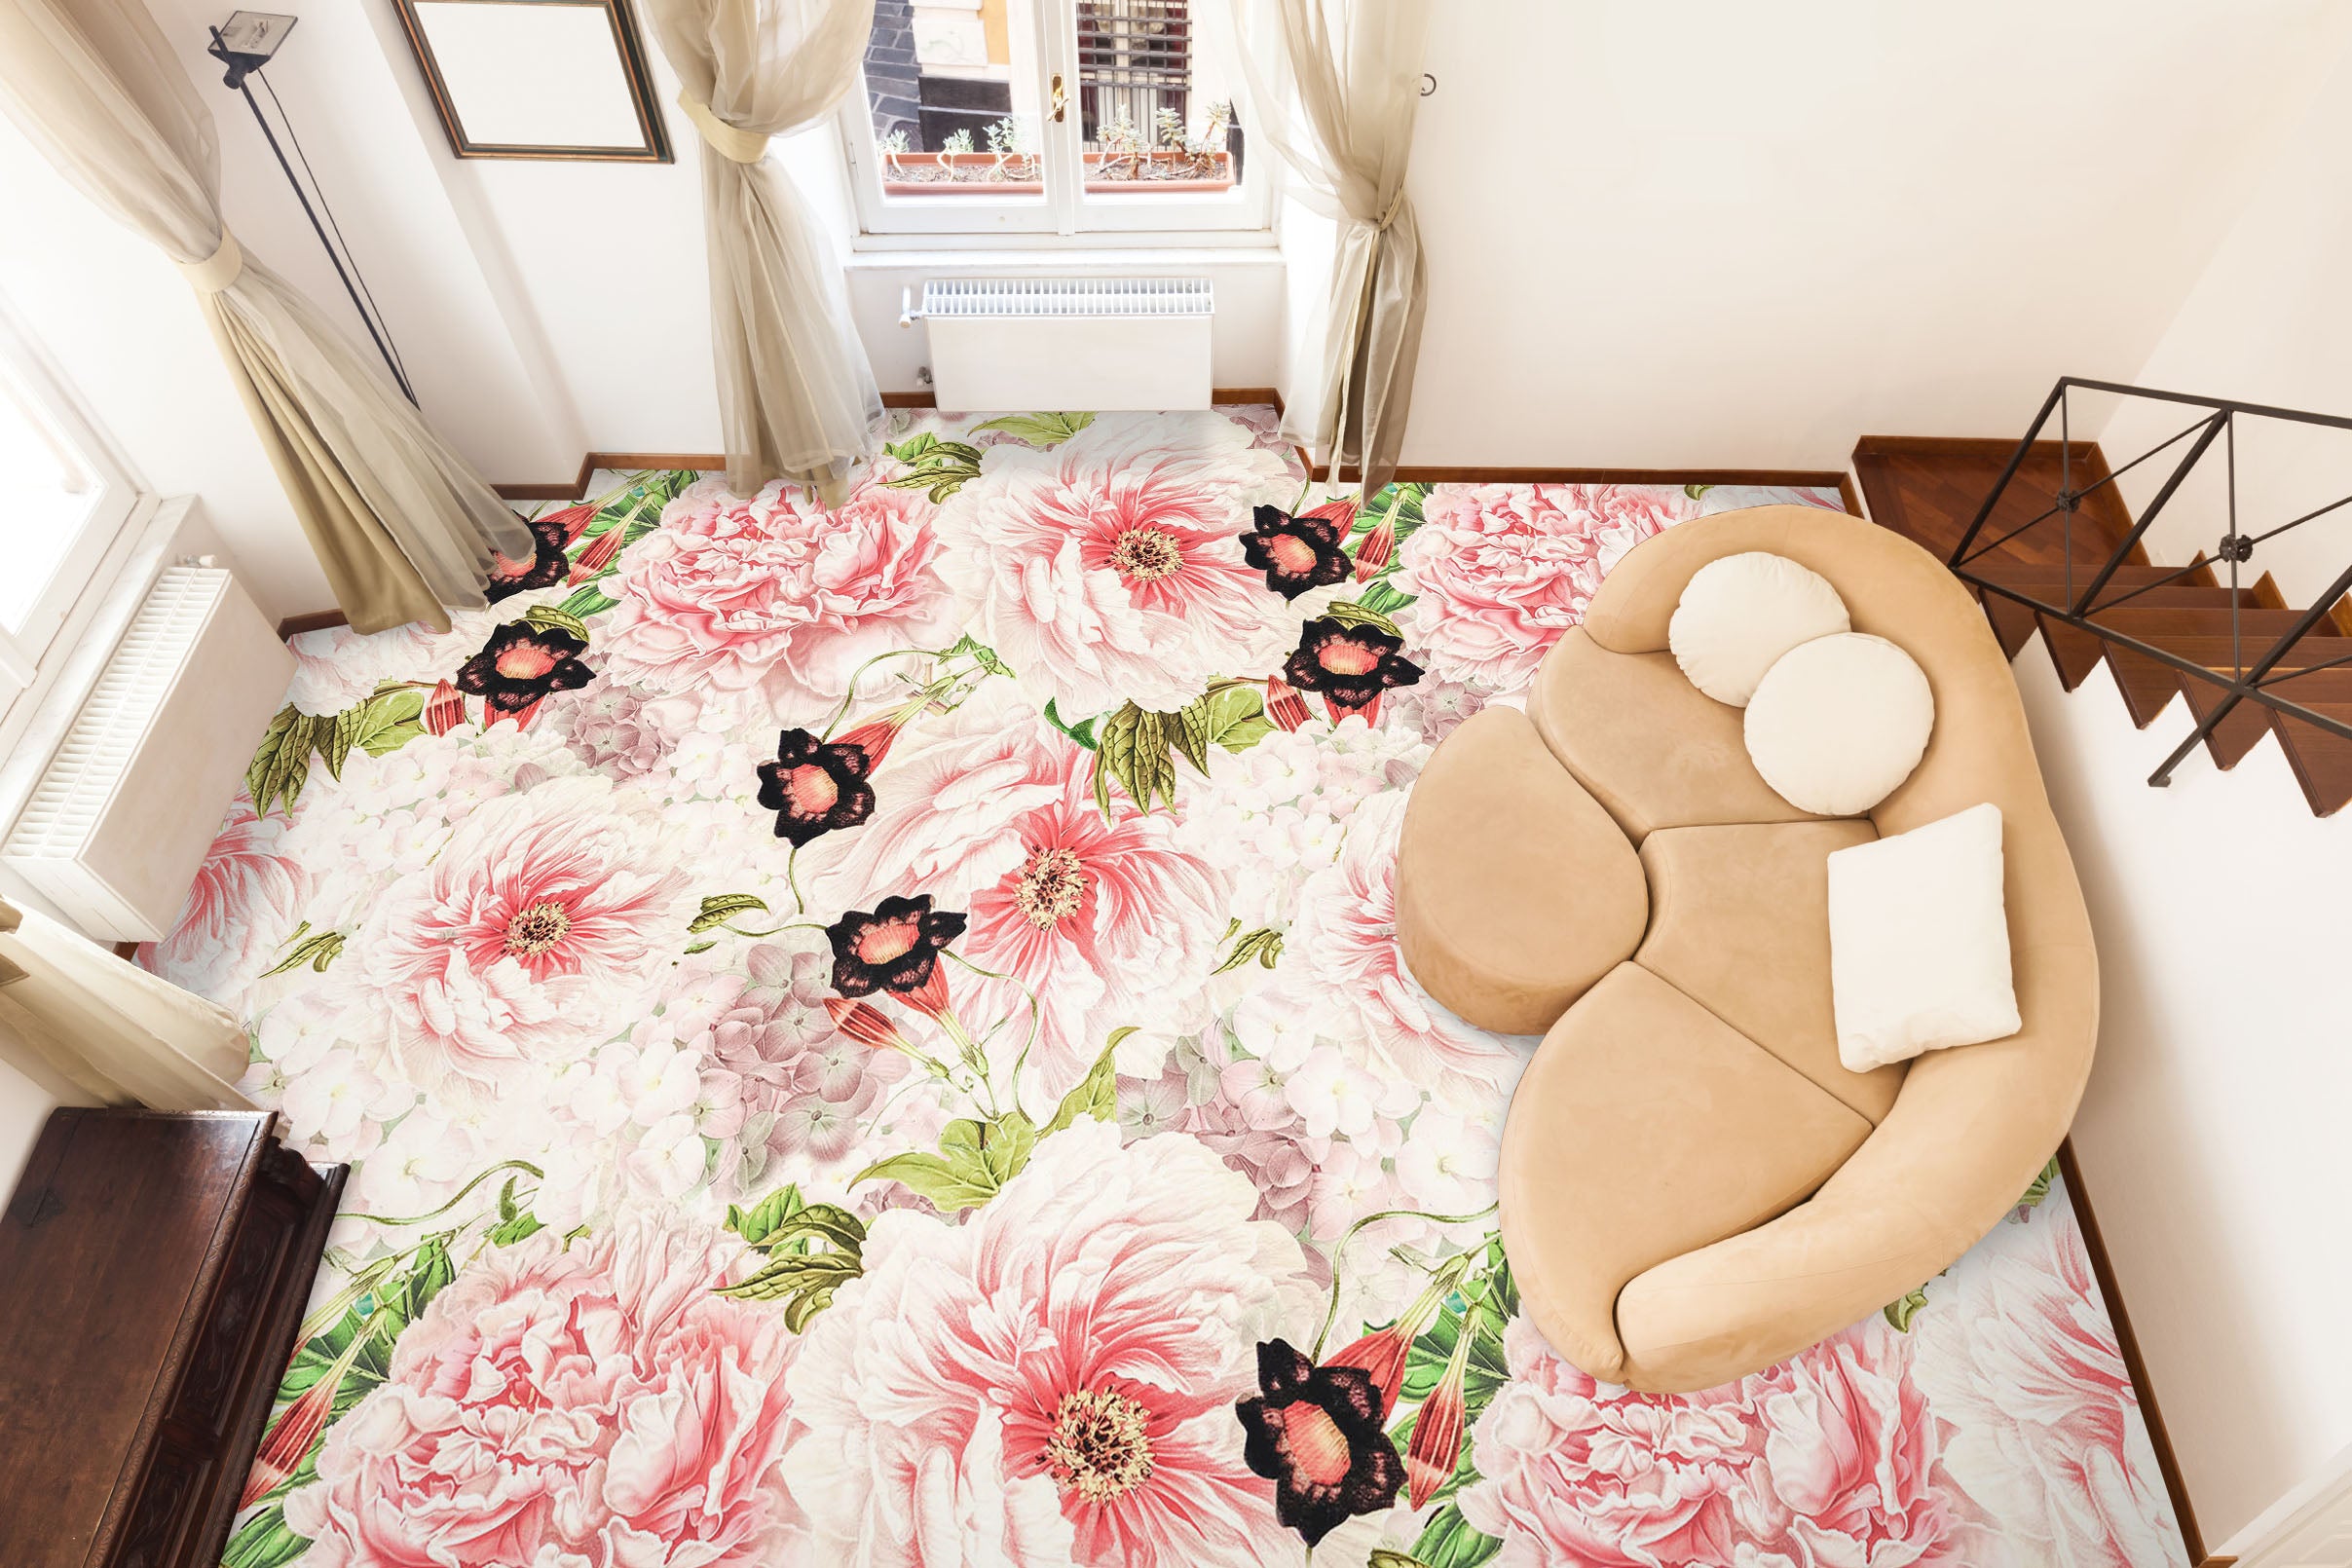 3D Pink Flowers 99209 Uta Naumann Floor Mural  Wallpaper Murals Self-Adhesive Removable Print Epoxy